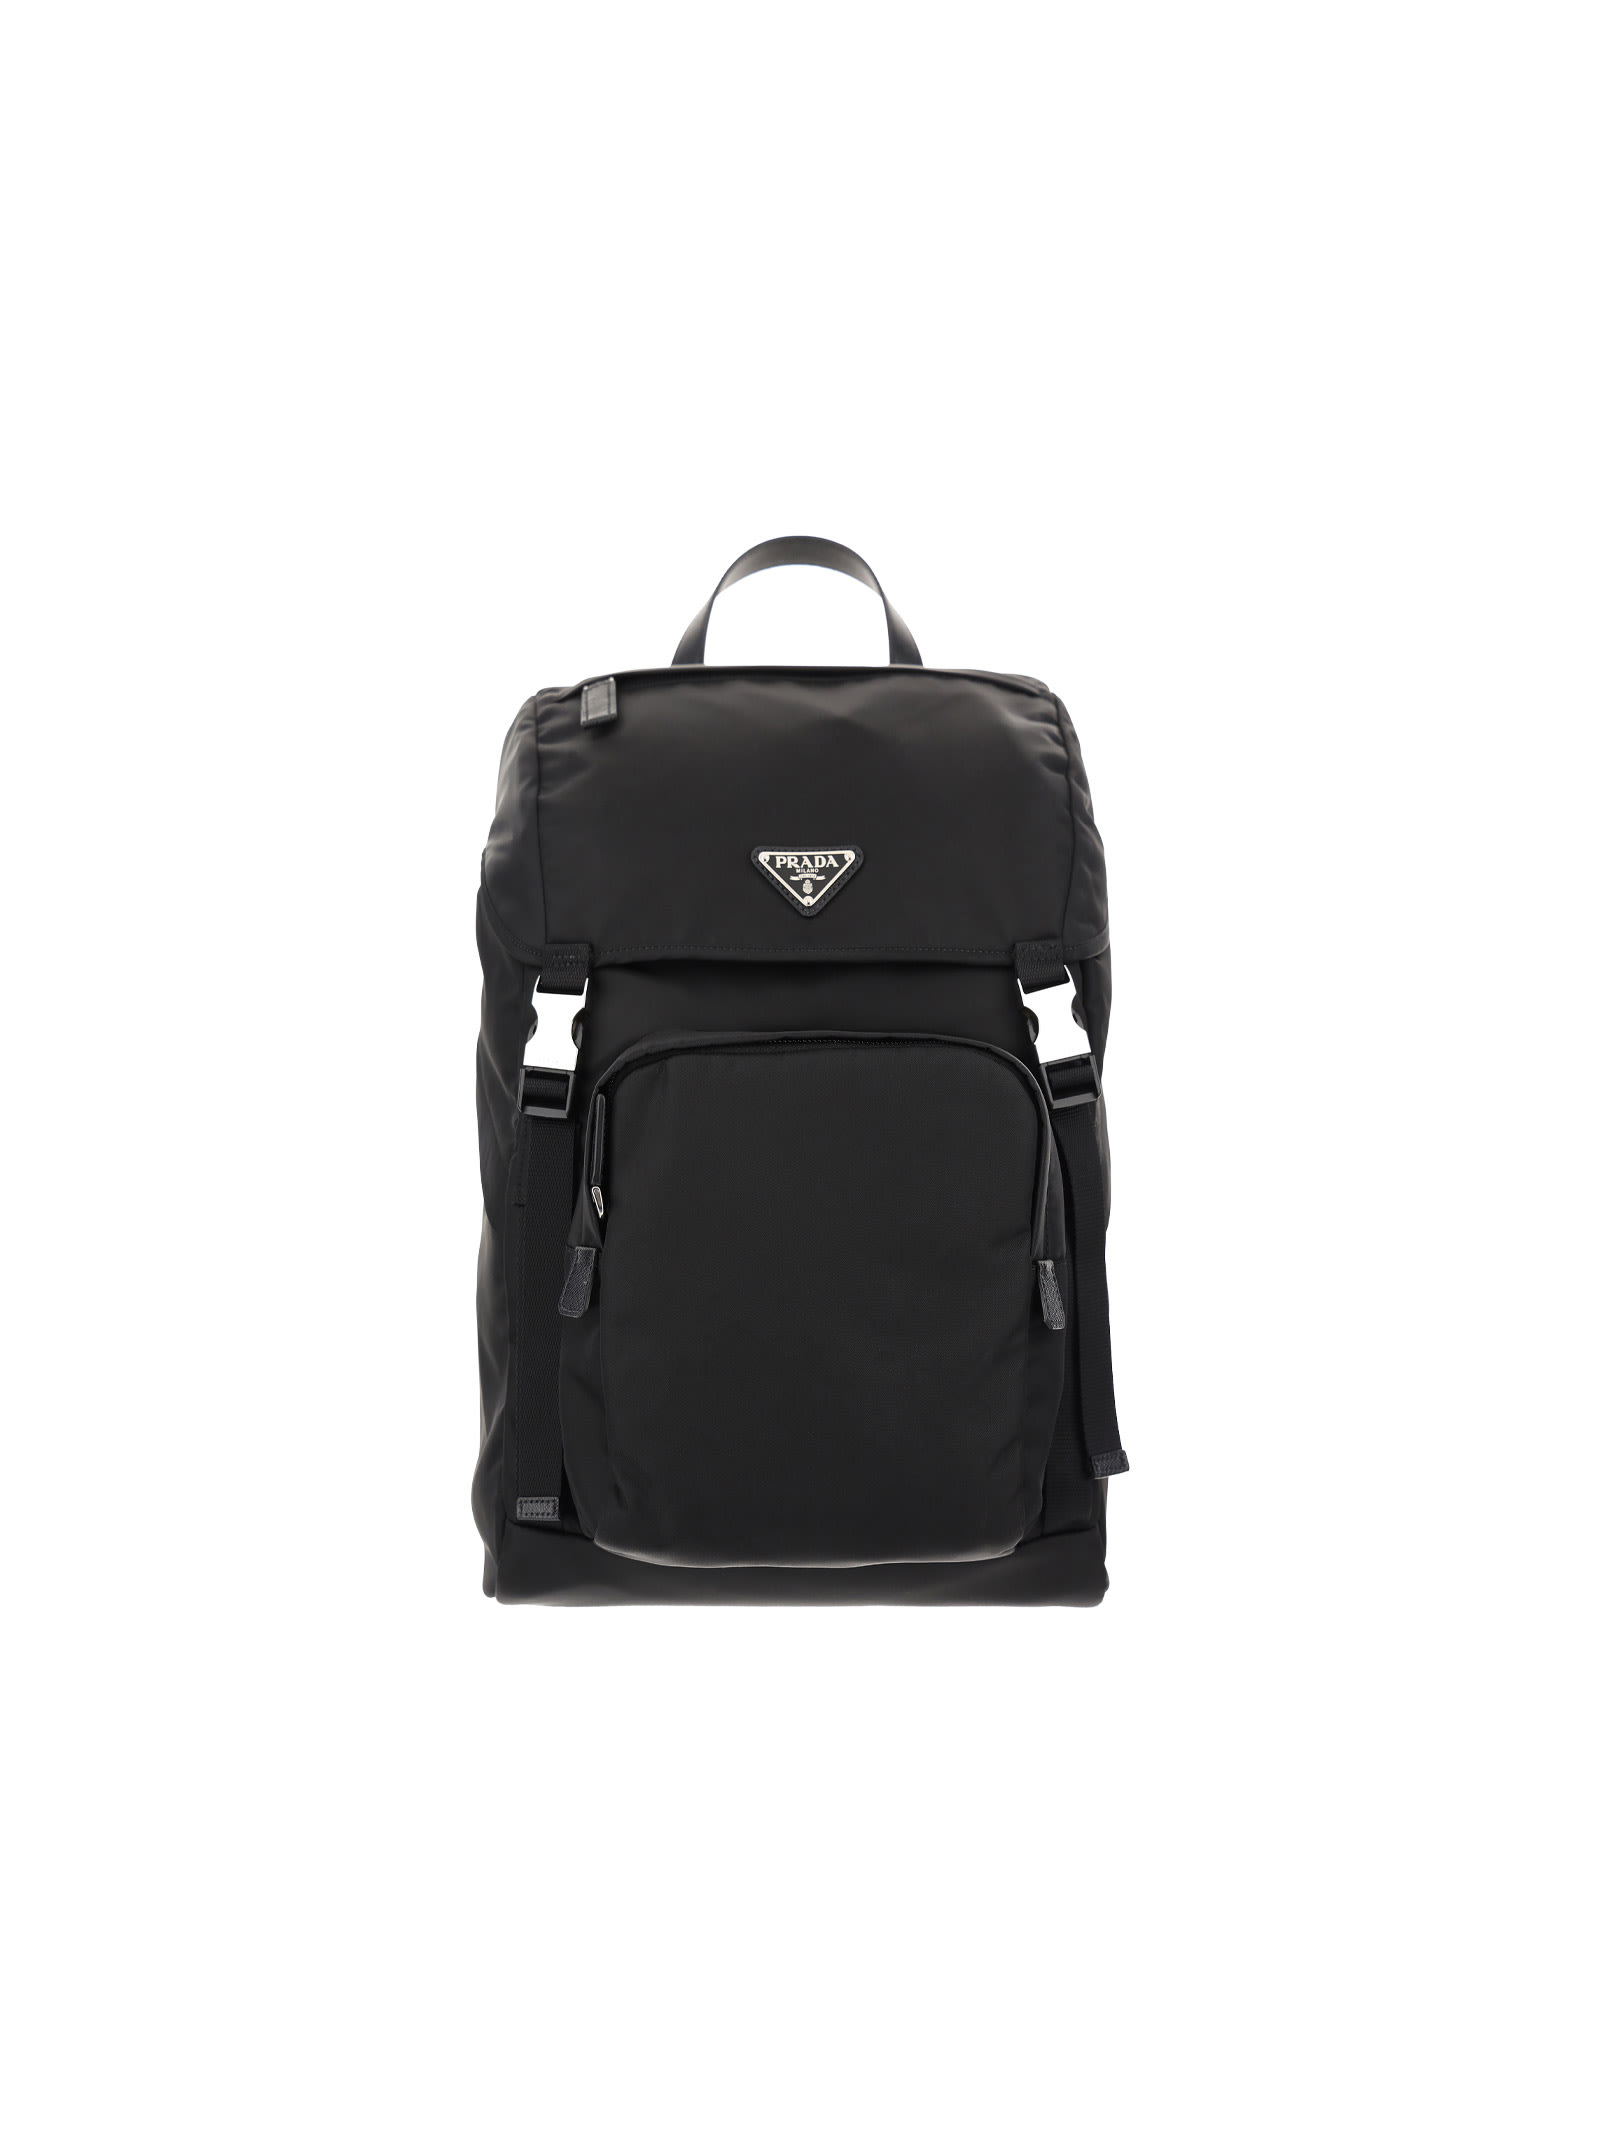 Prada Backpack In Nero | ModeSens